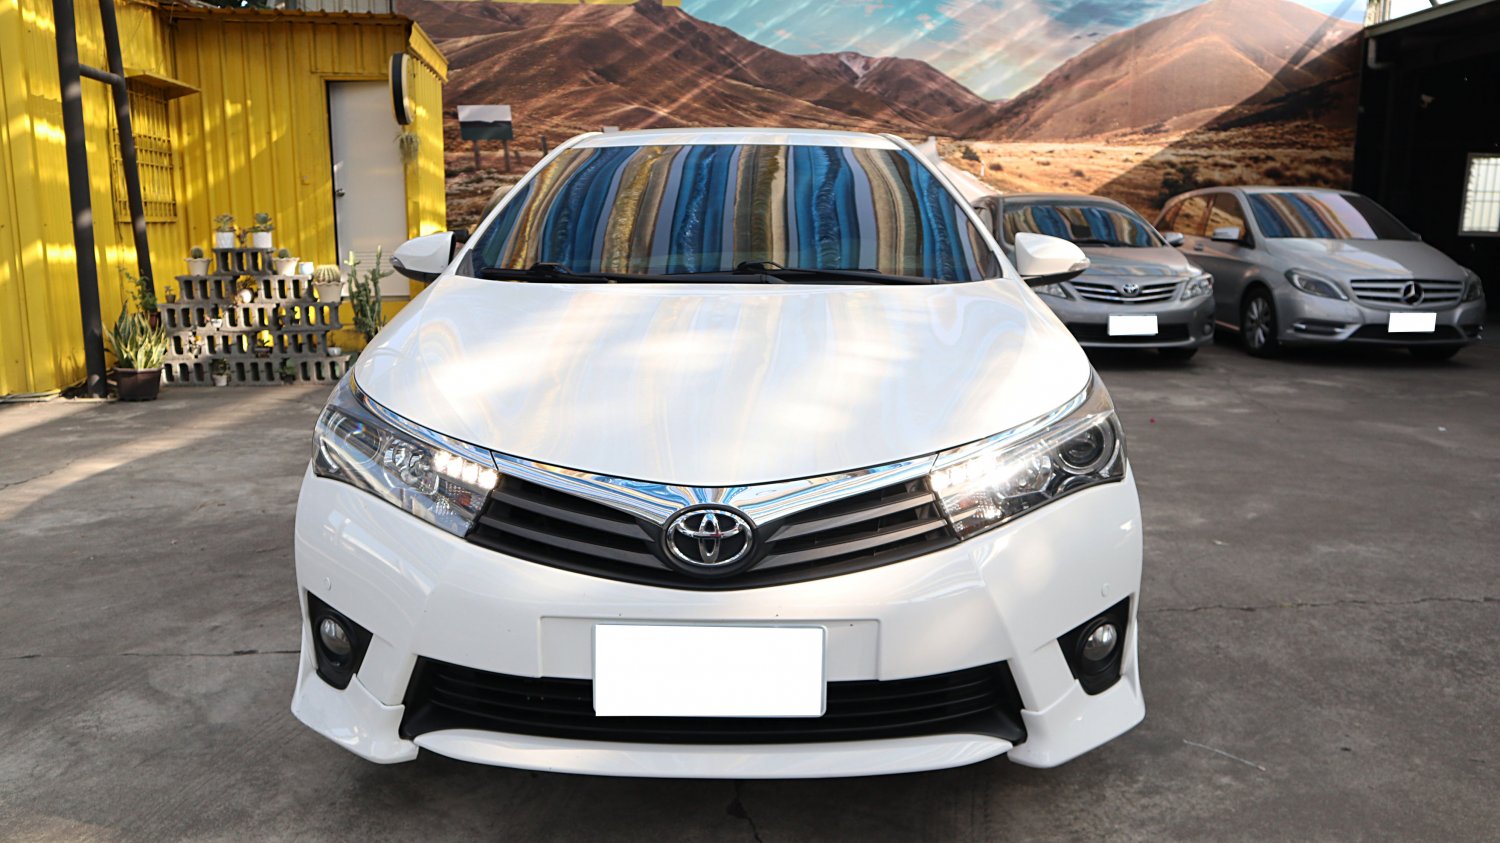 Toyota 豐田 ／ Altis ／ 2015年 ／ 2015年 Toyota Altis 白色 豐田中古車 ／ 九州欣旺汽車 (台南)